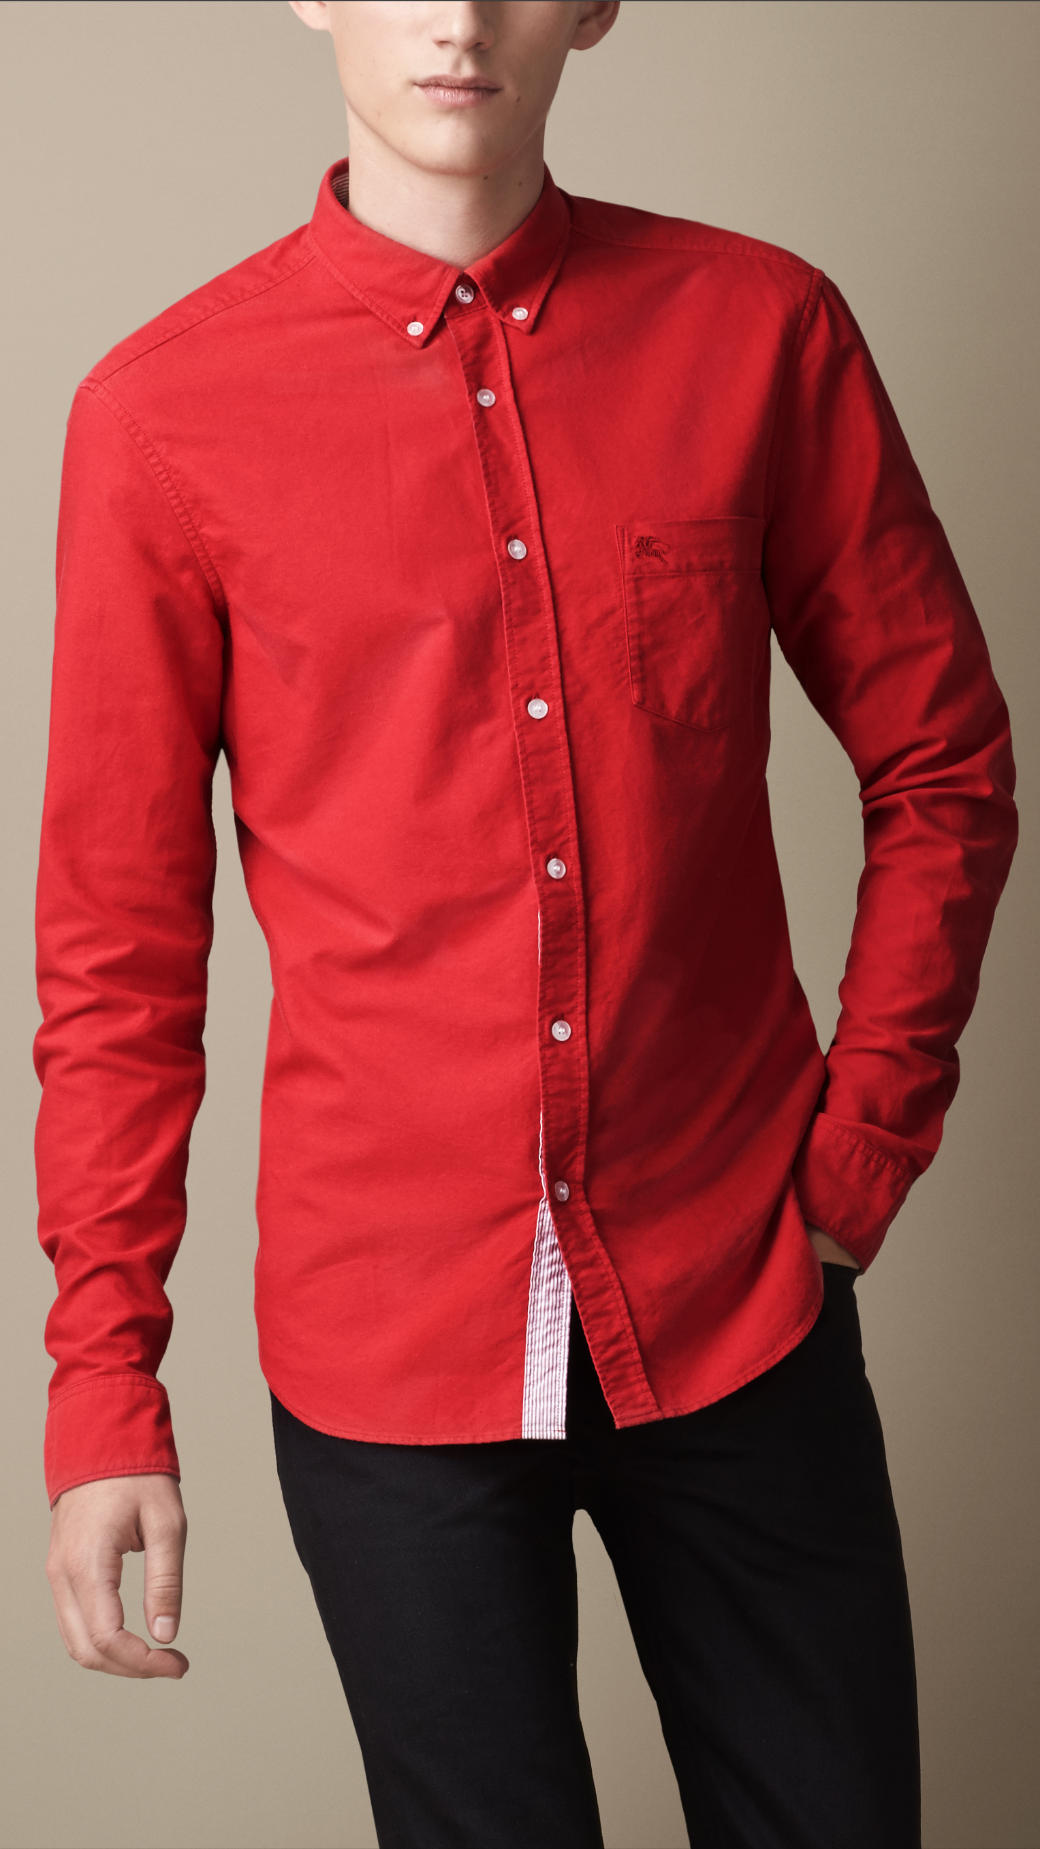 mens red button down shirt